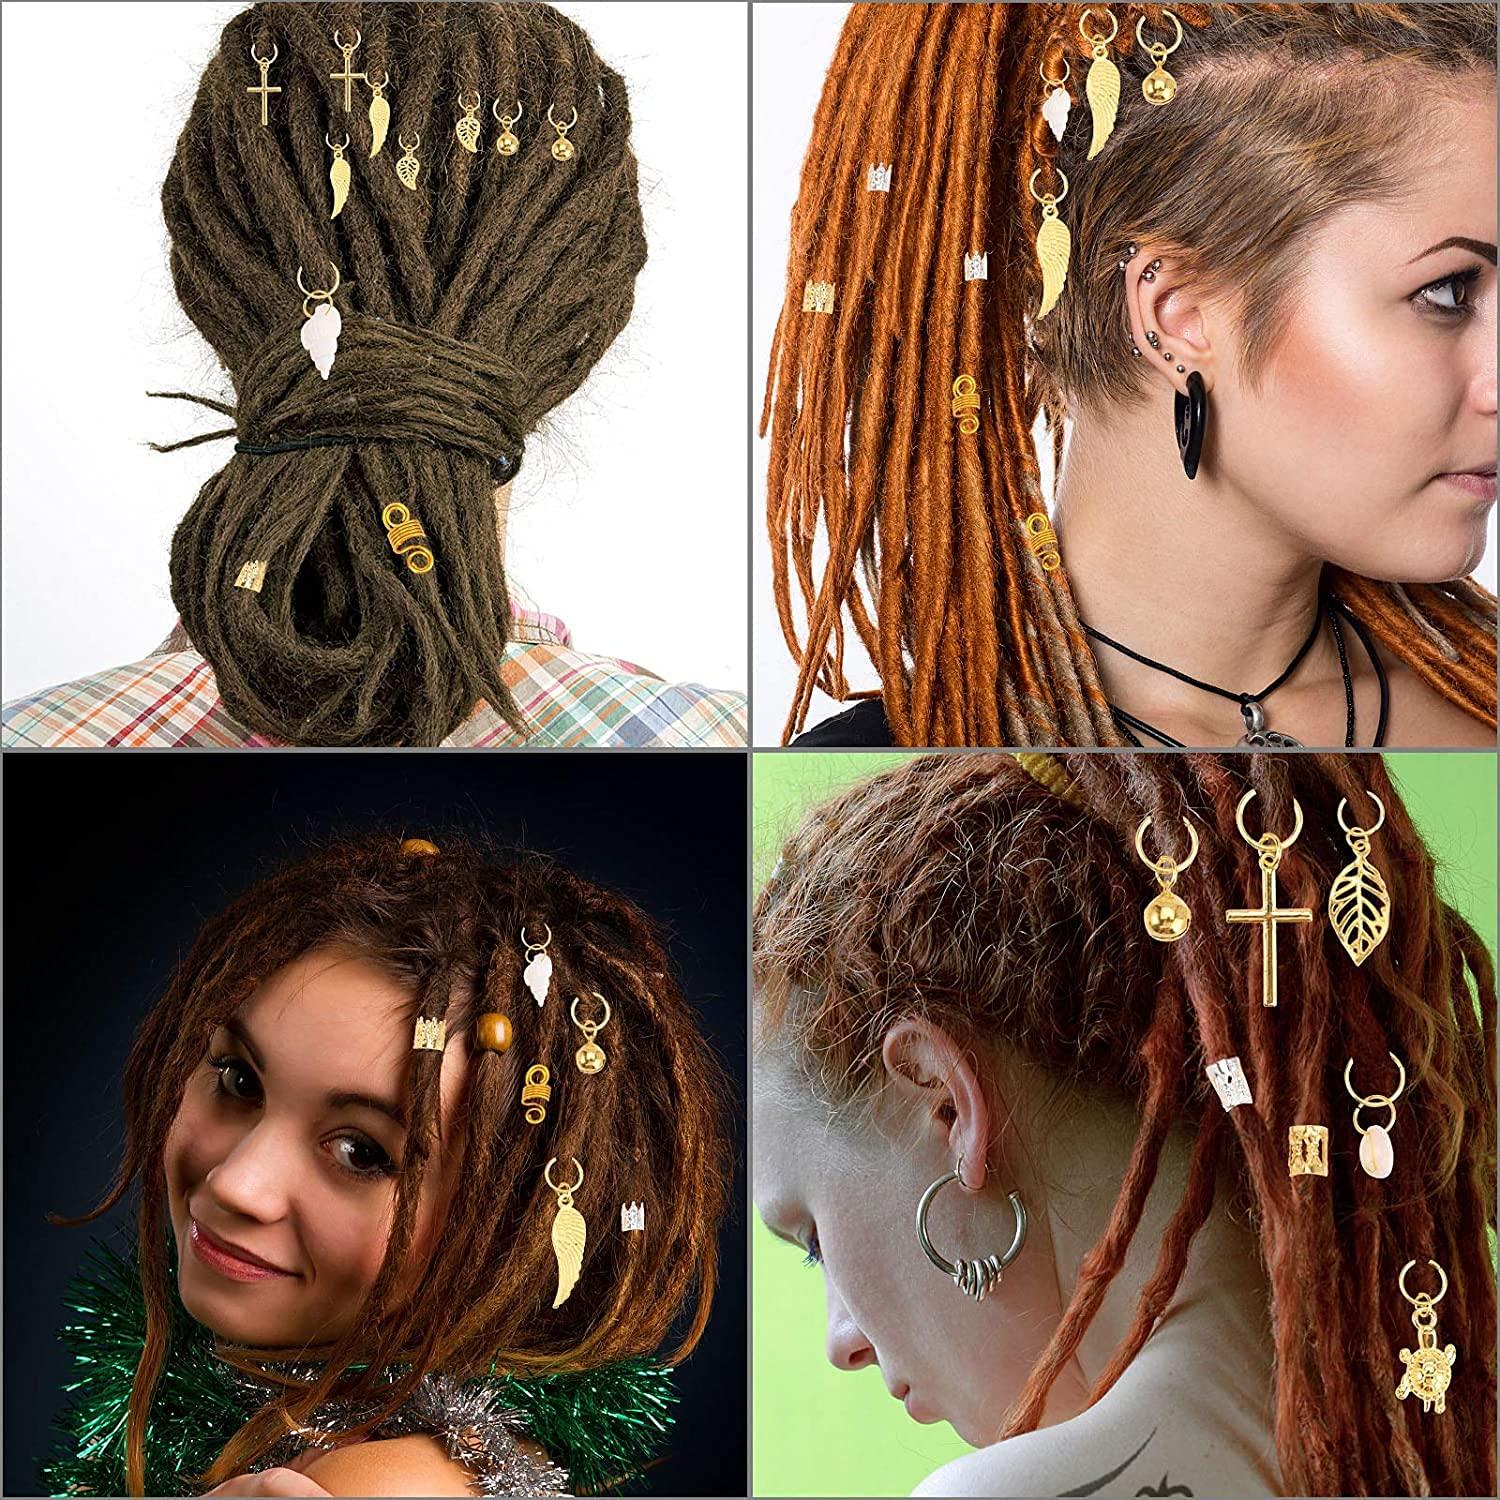 enophe 23Pcs Silver Hair Jewelry Set for Women: Loc Accessories, Hair Cuffs  for Braids & Dreadlocks, Halloween Decoration